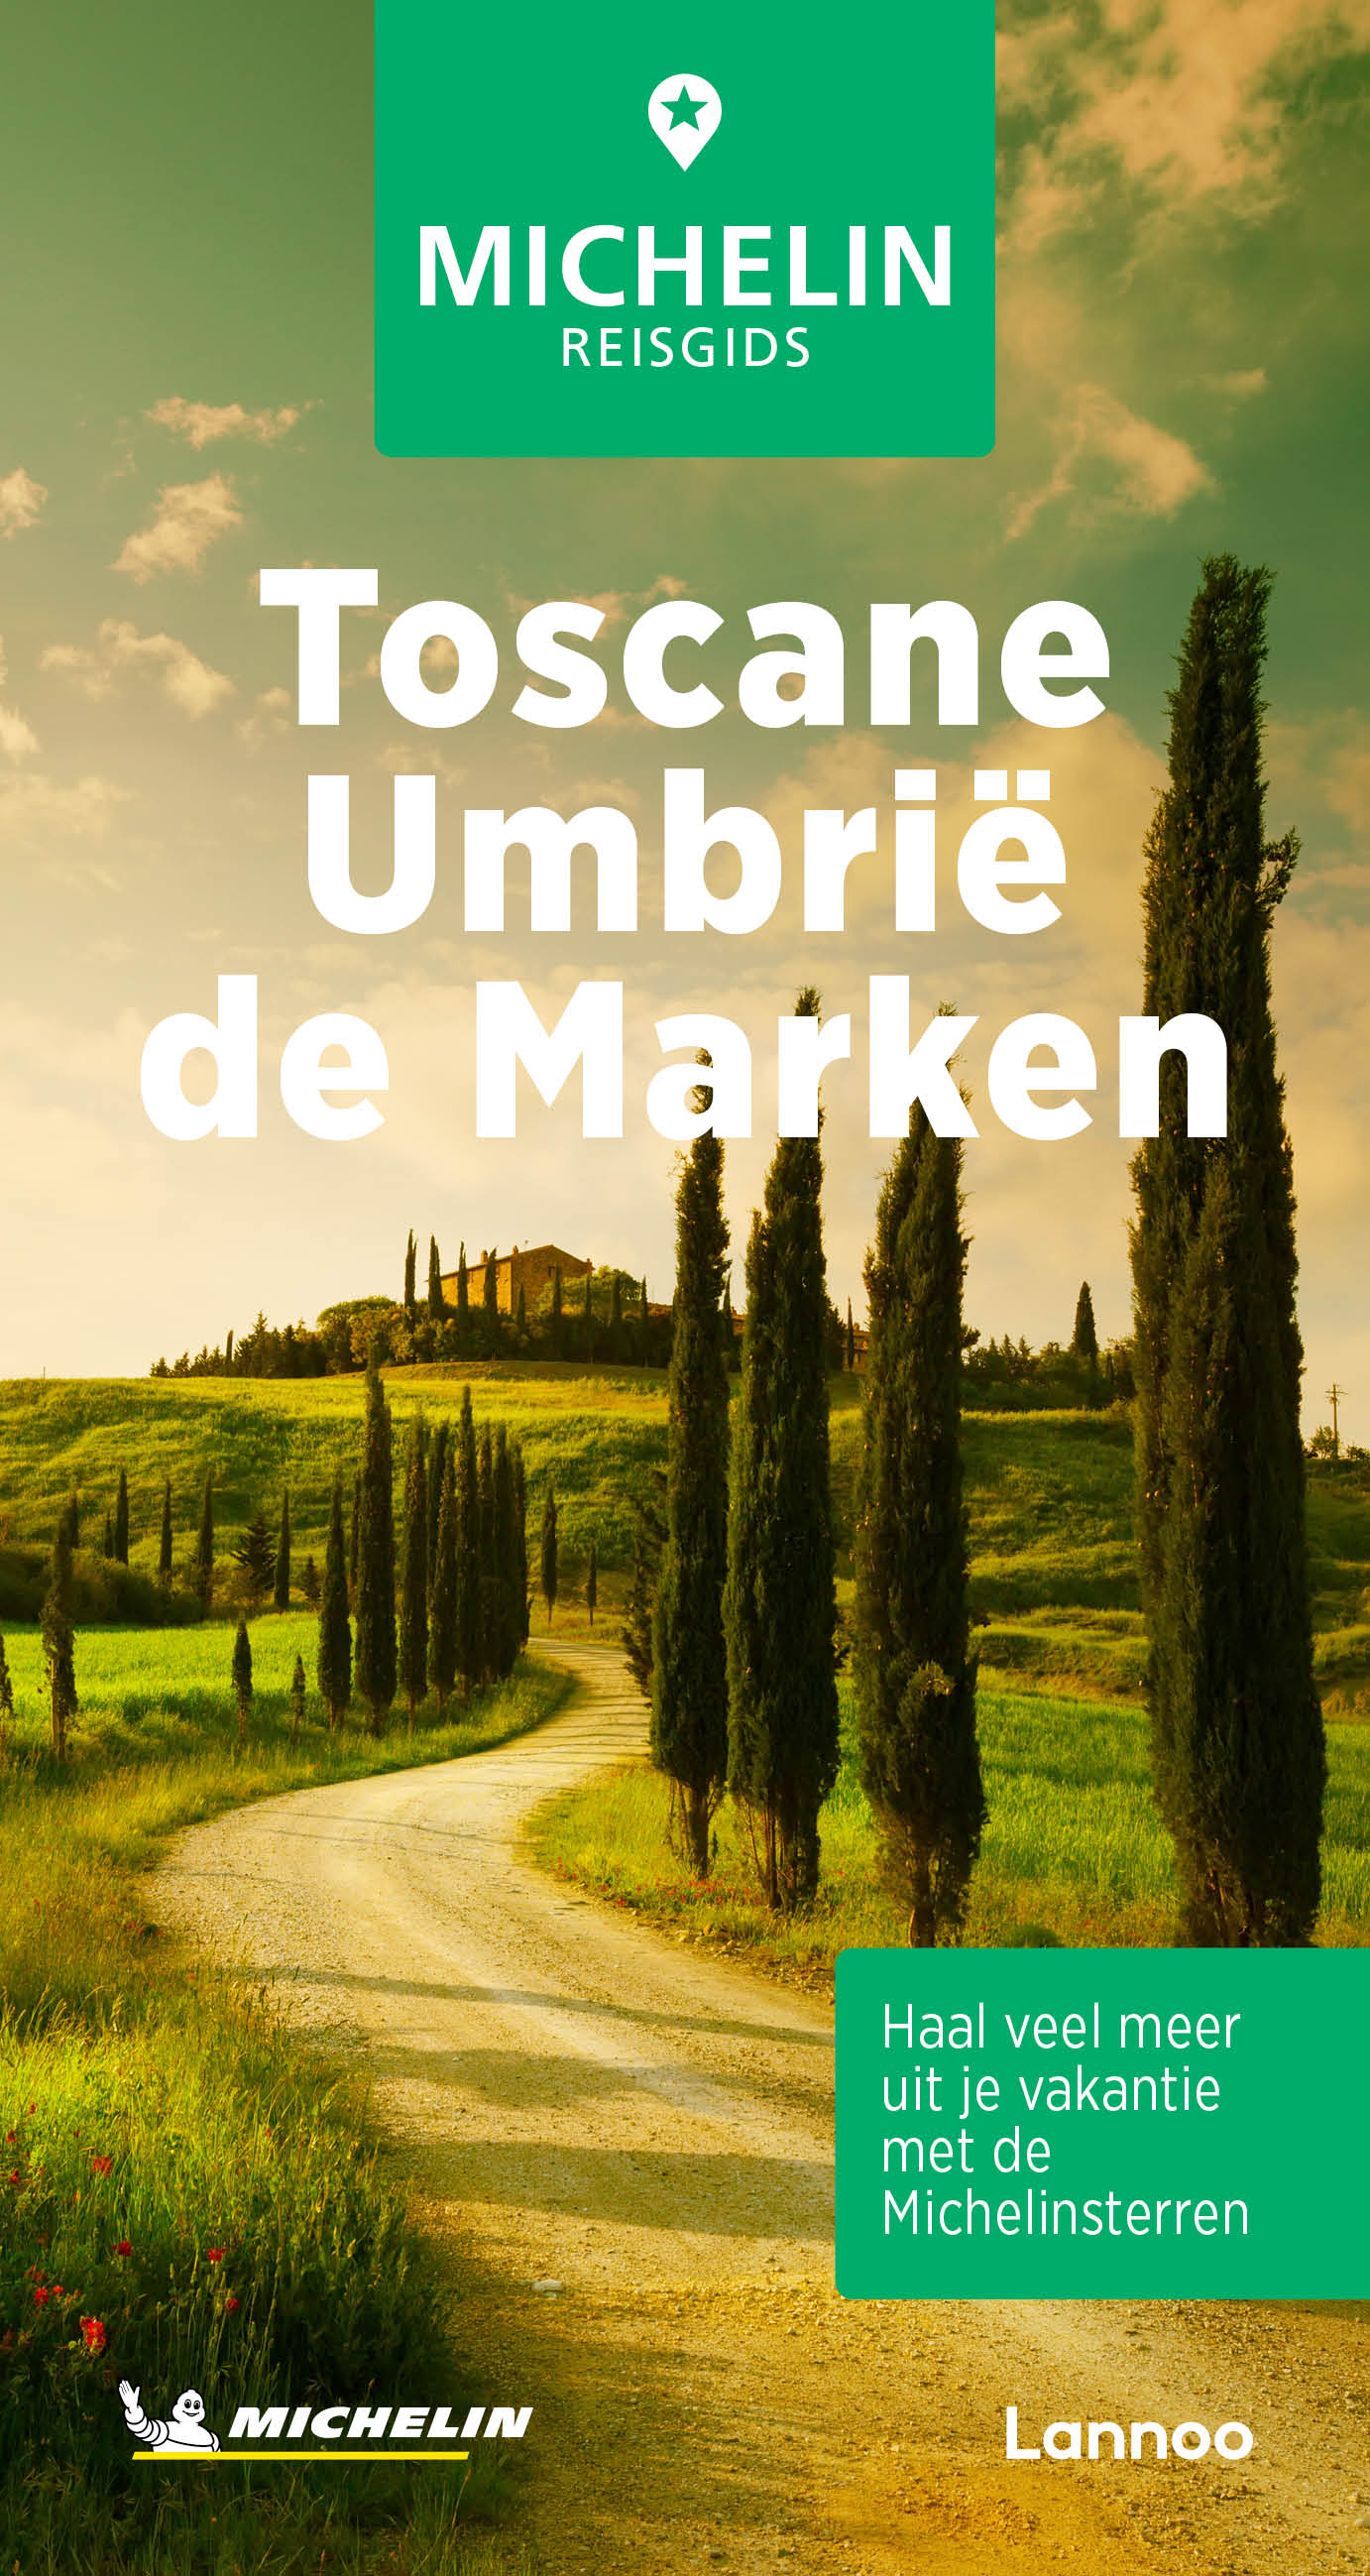 Online bestellen: Reisgids Michelin groene gids Toscane-Umbrië-de Marken | Lannoo